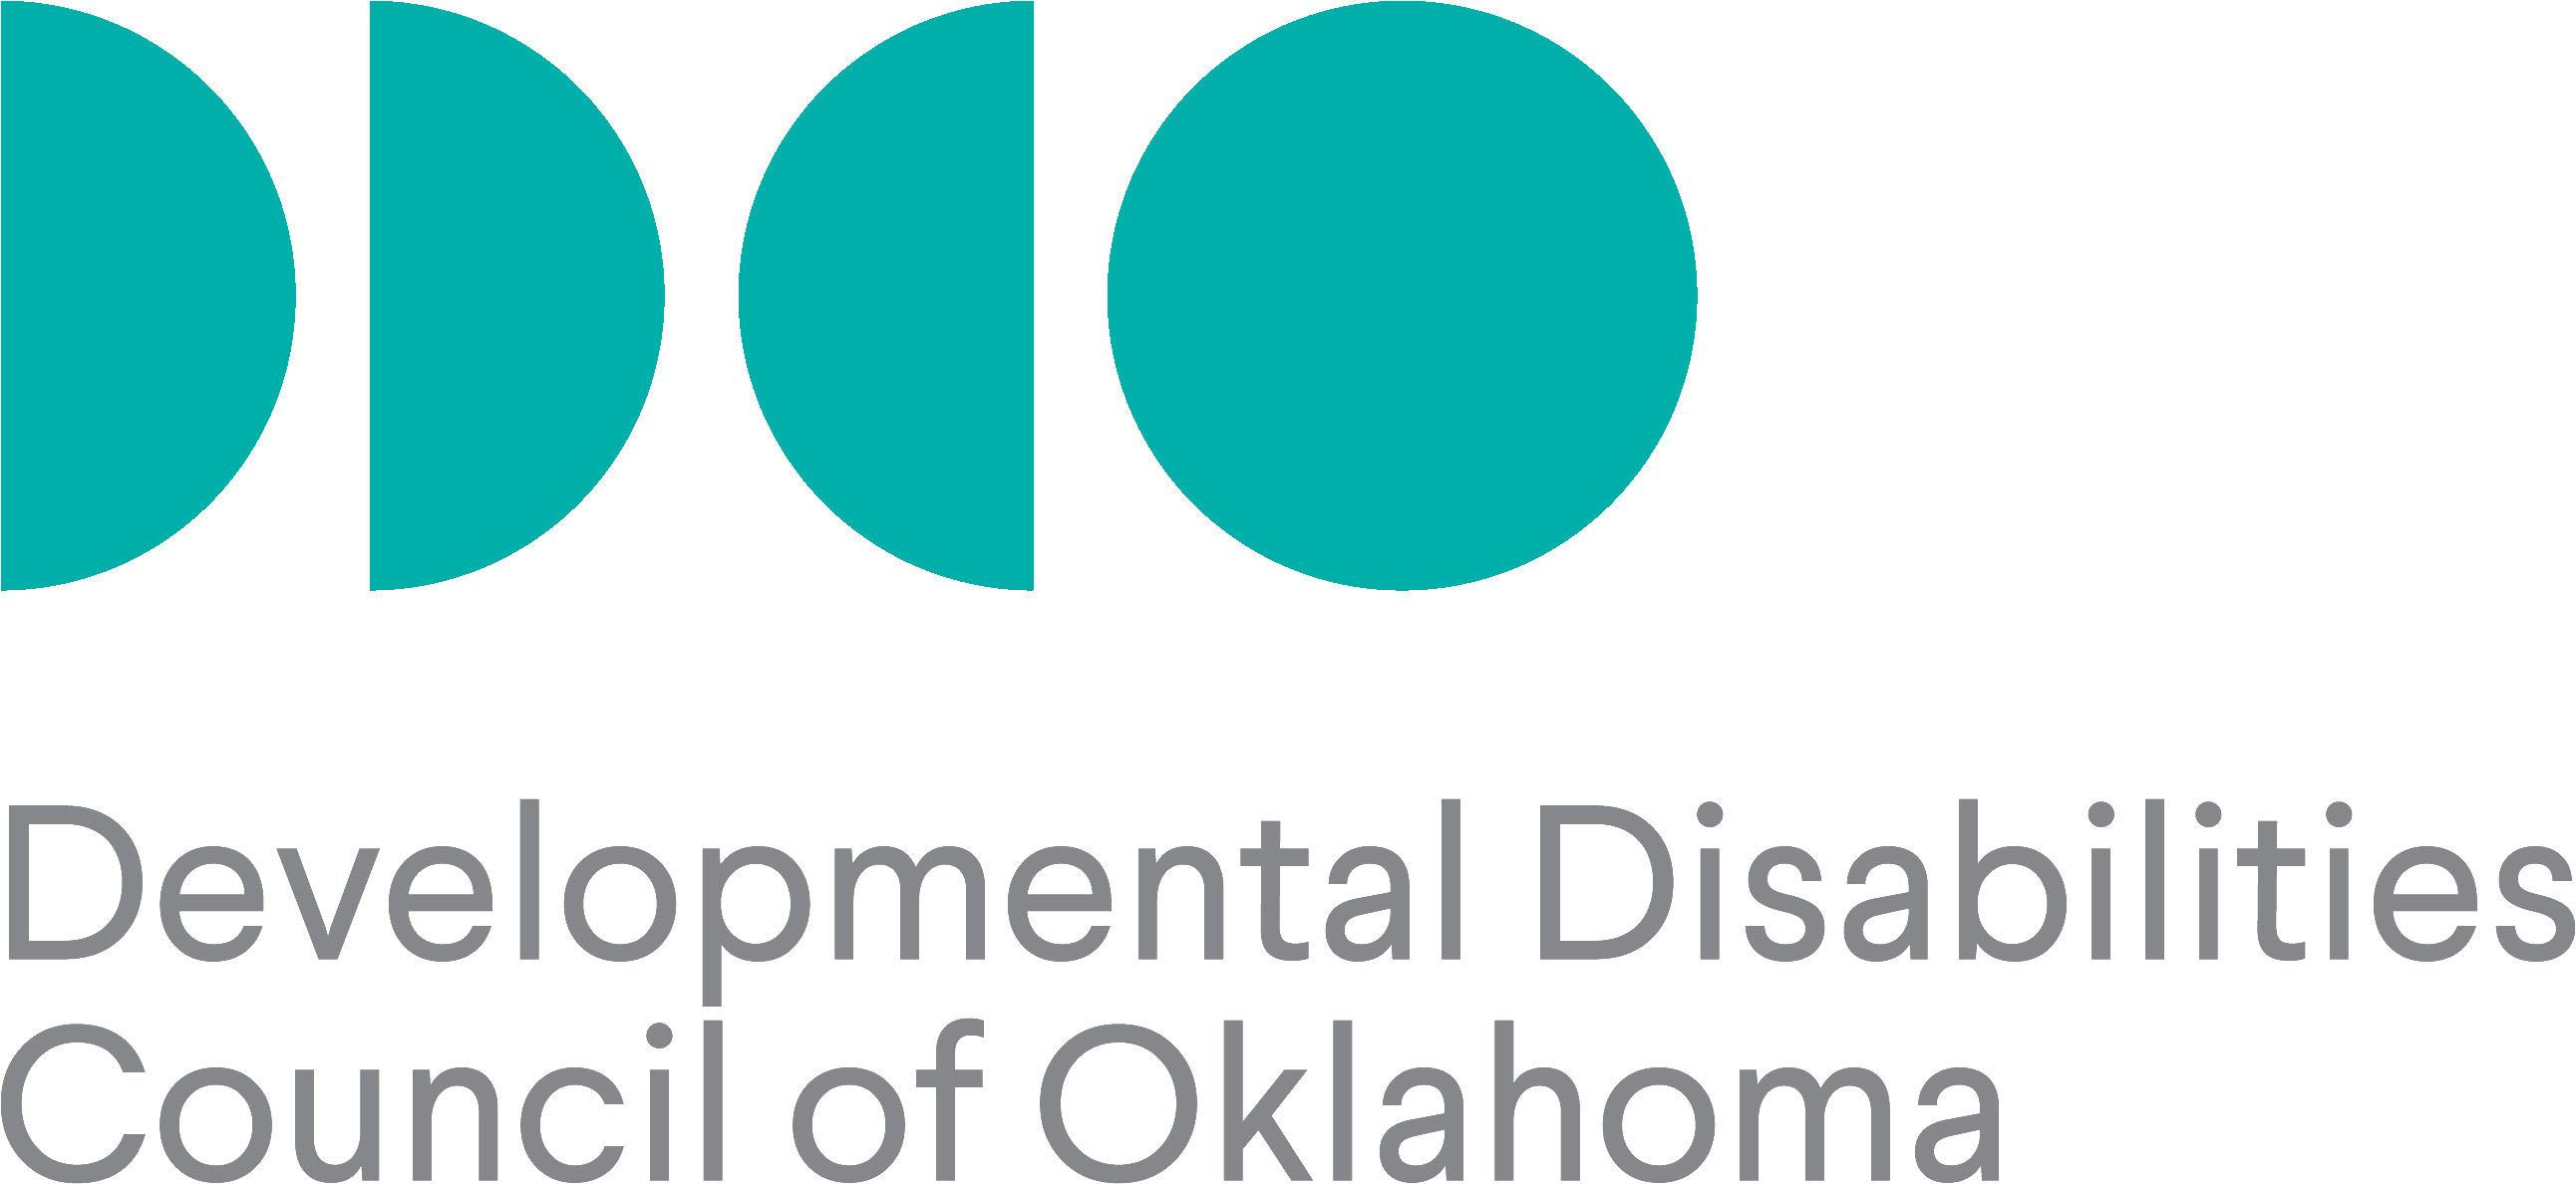 DDCO: Developmental Disabilities Council of Oklahoma